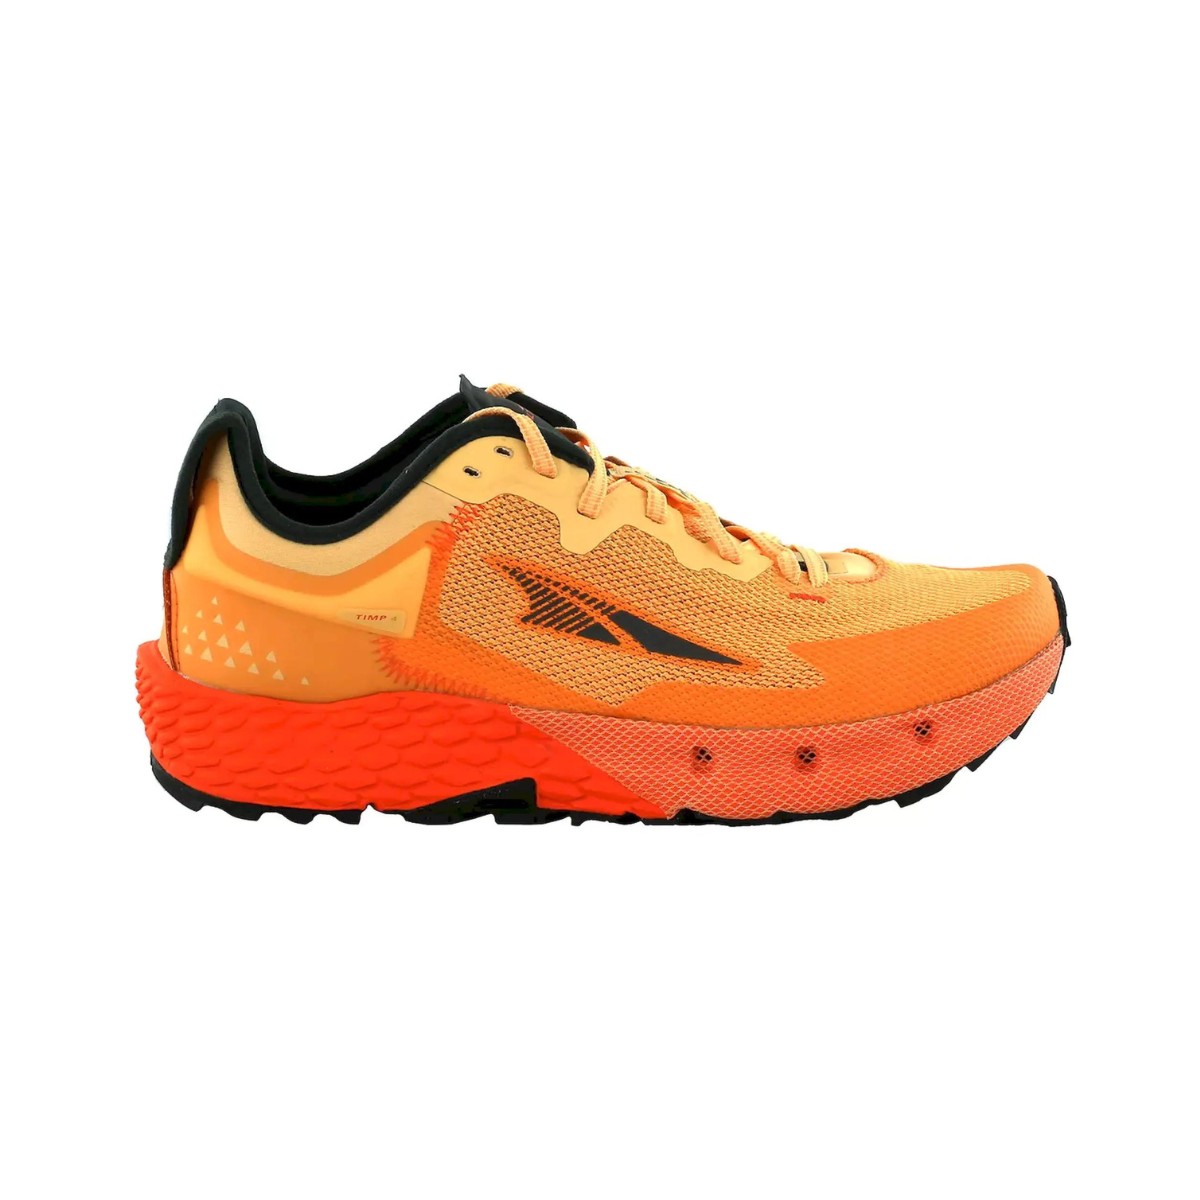 Shoes Altra Timp 4 Orange AW22, Size 41 - EUR